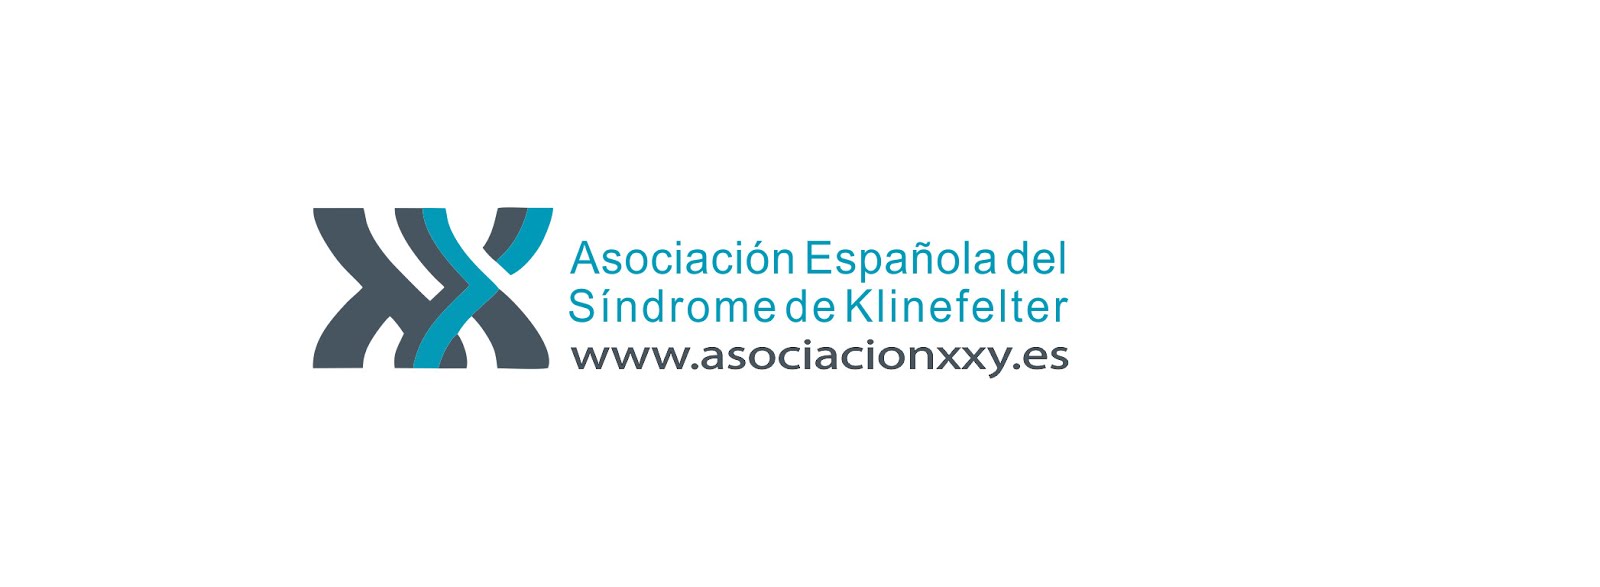 Asociación Española del Síndrome de Klinefelter